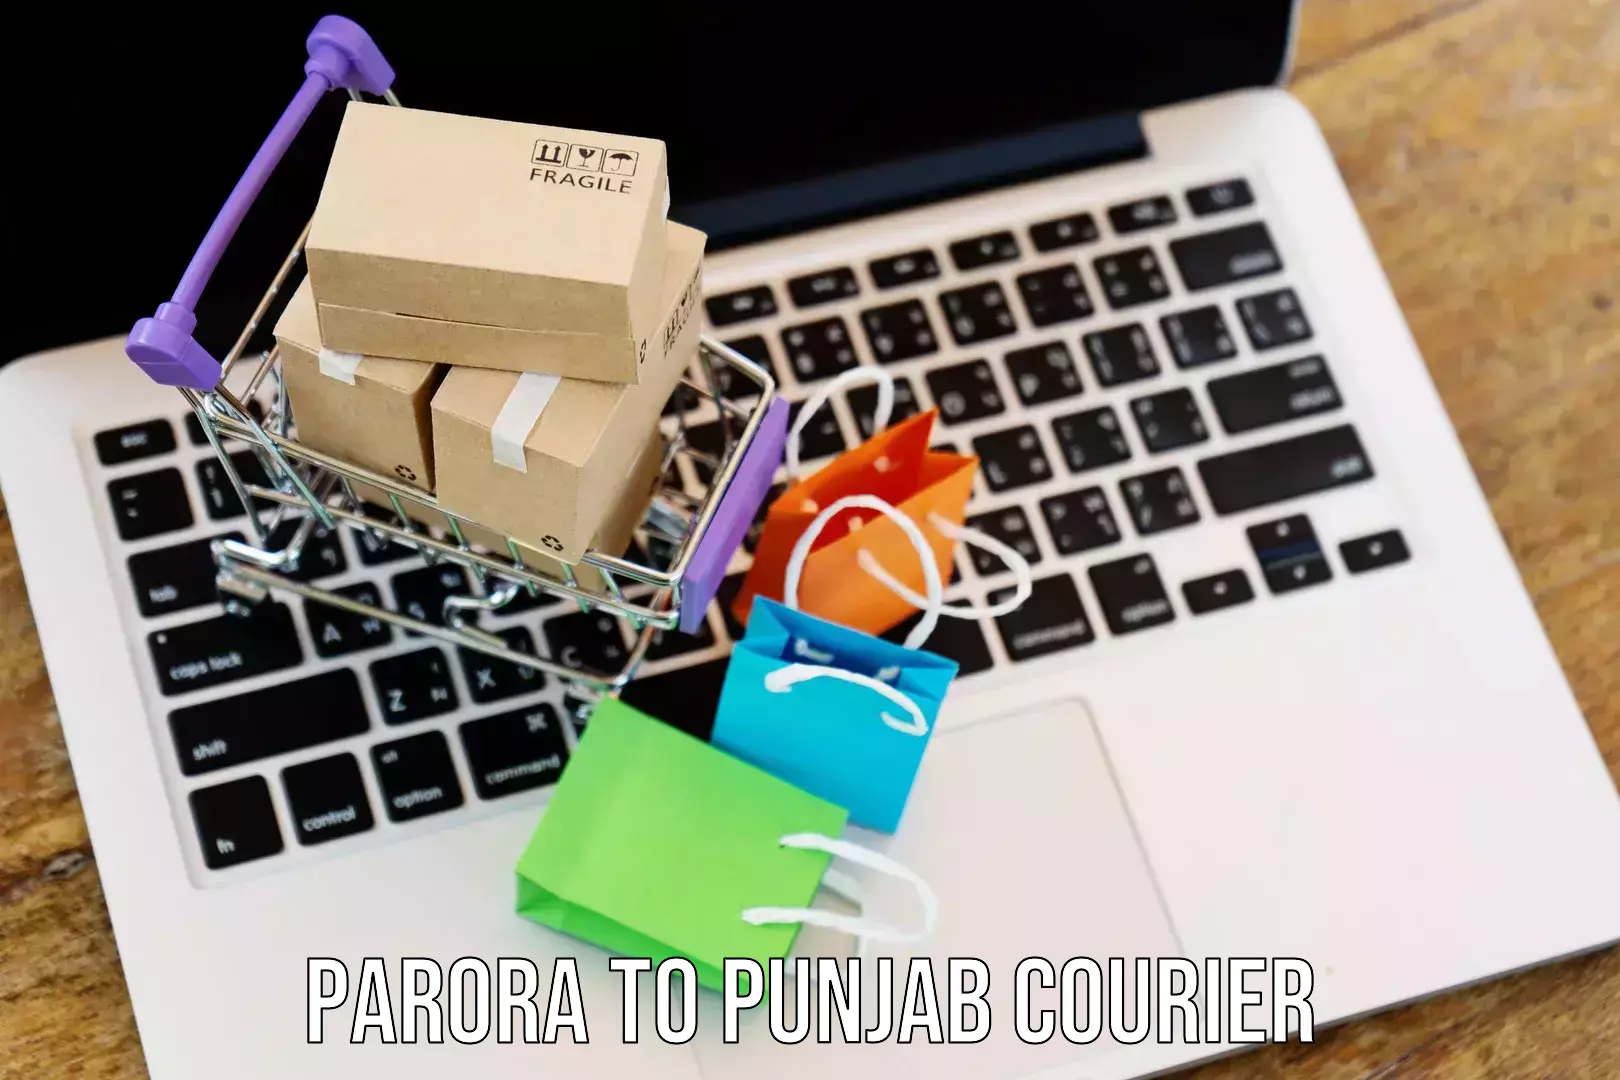 Modern parcel services Parora to Punjab